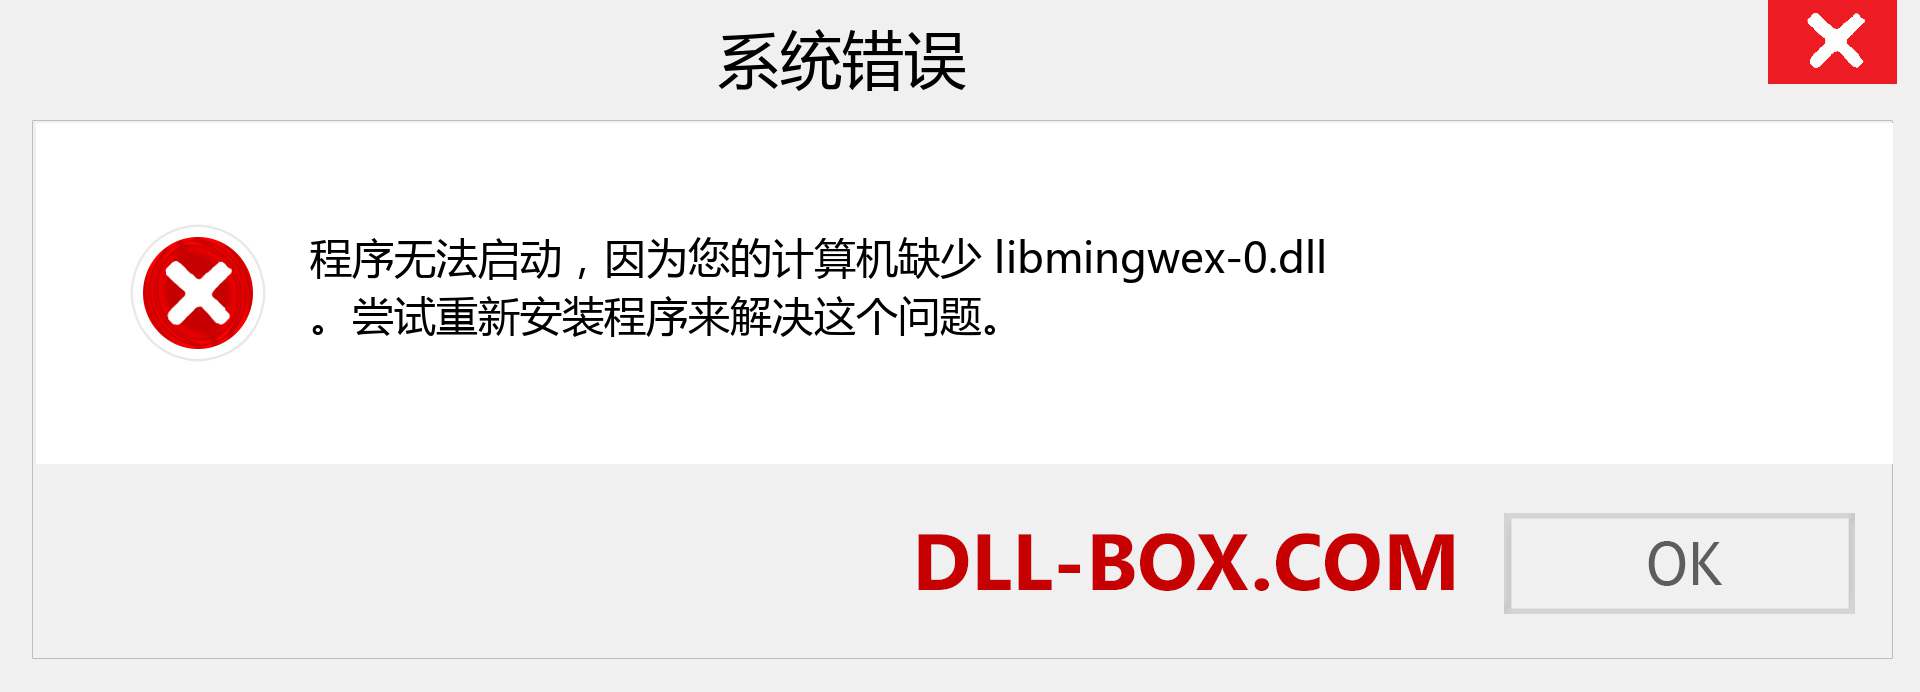 libmingwex-0.dll 文件丢失？。 适用于 Windows 7、8、10 的下载 - 修复 Windows、照片、图像上的 libmingwex-0 dll 丢失错误